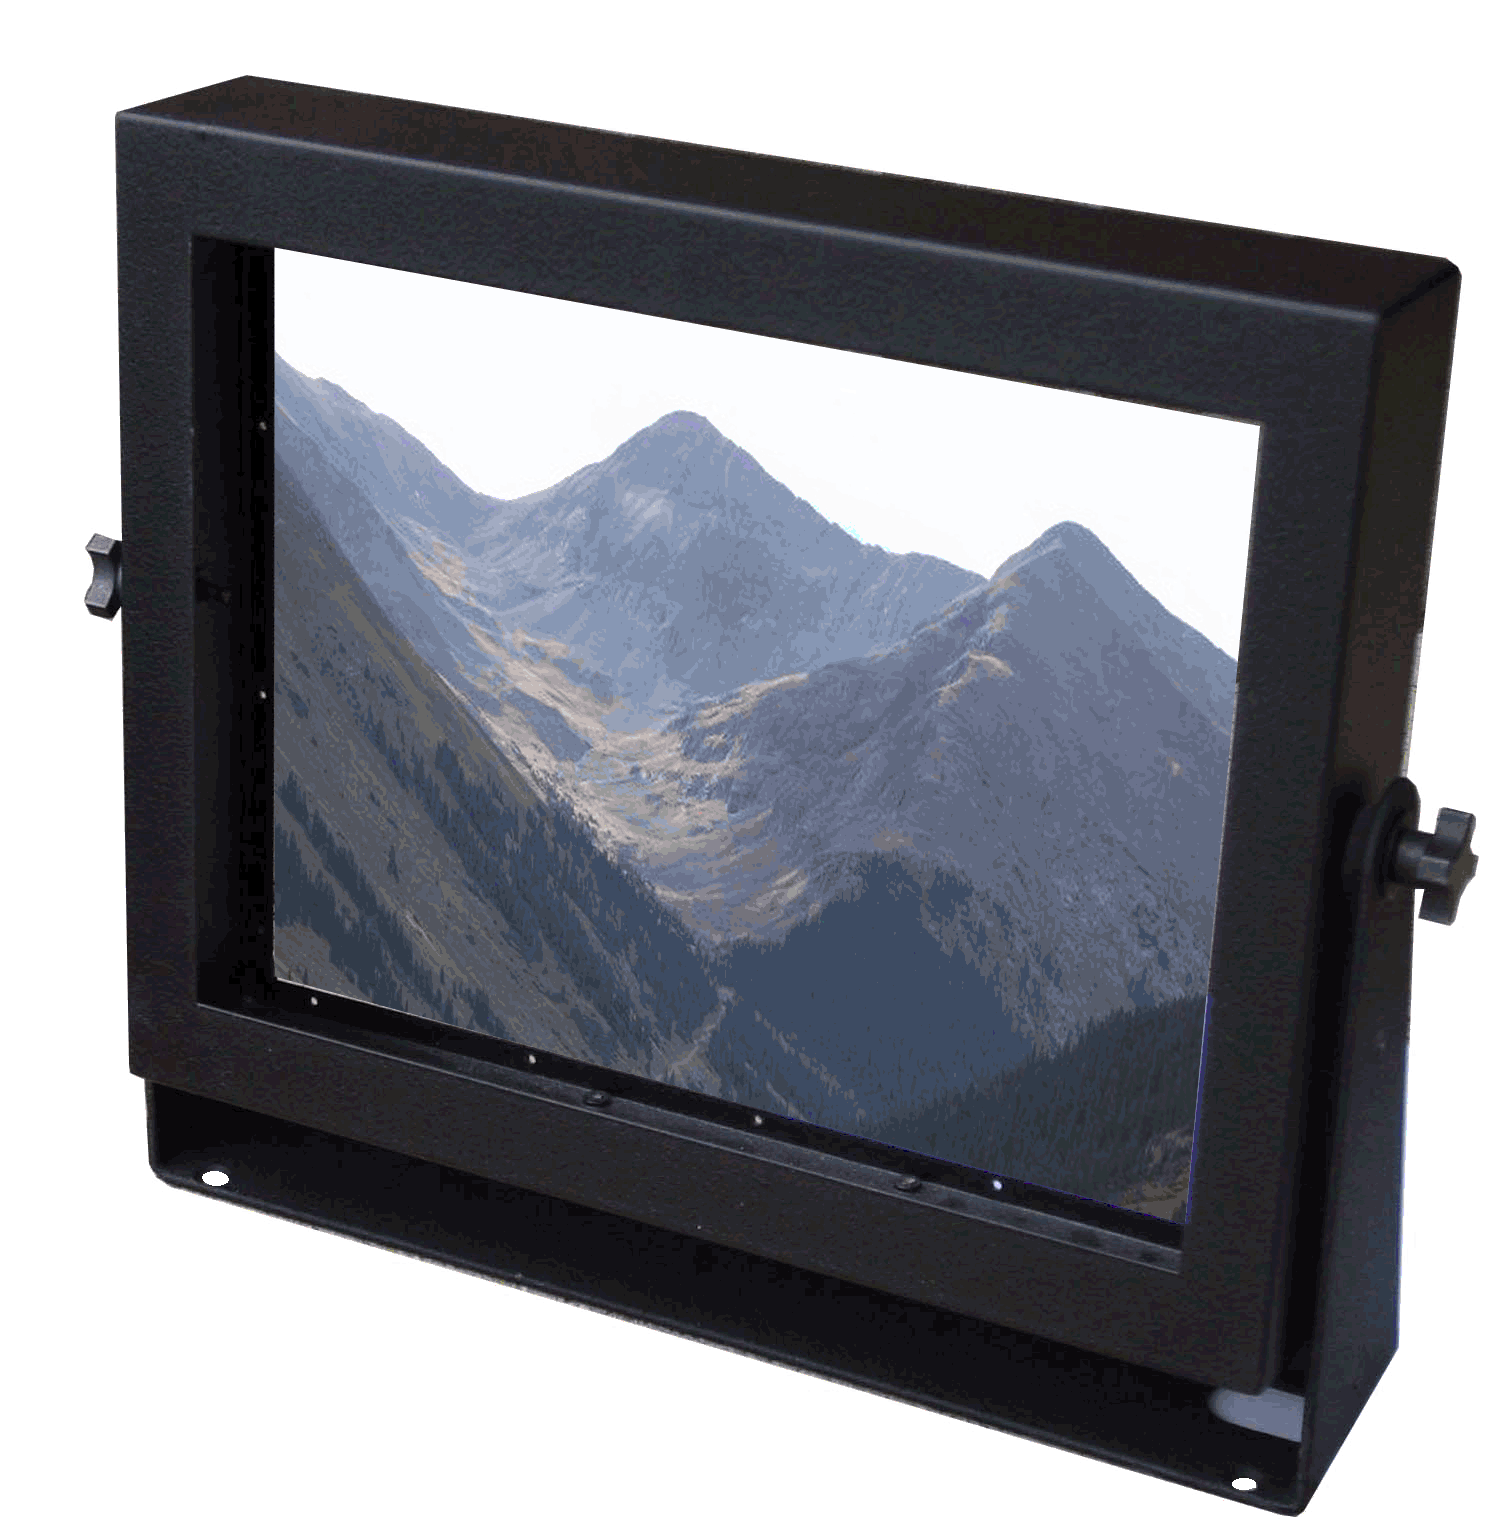 Industrial LCD Monitors 15.1" LCD in Enclosed Metal Cabinet Version Model Short U bracket front view